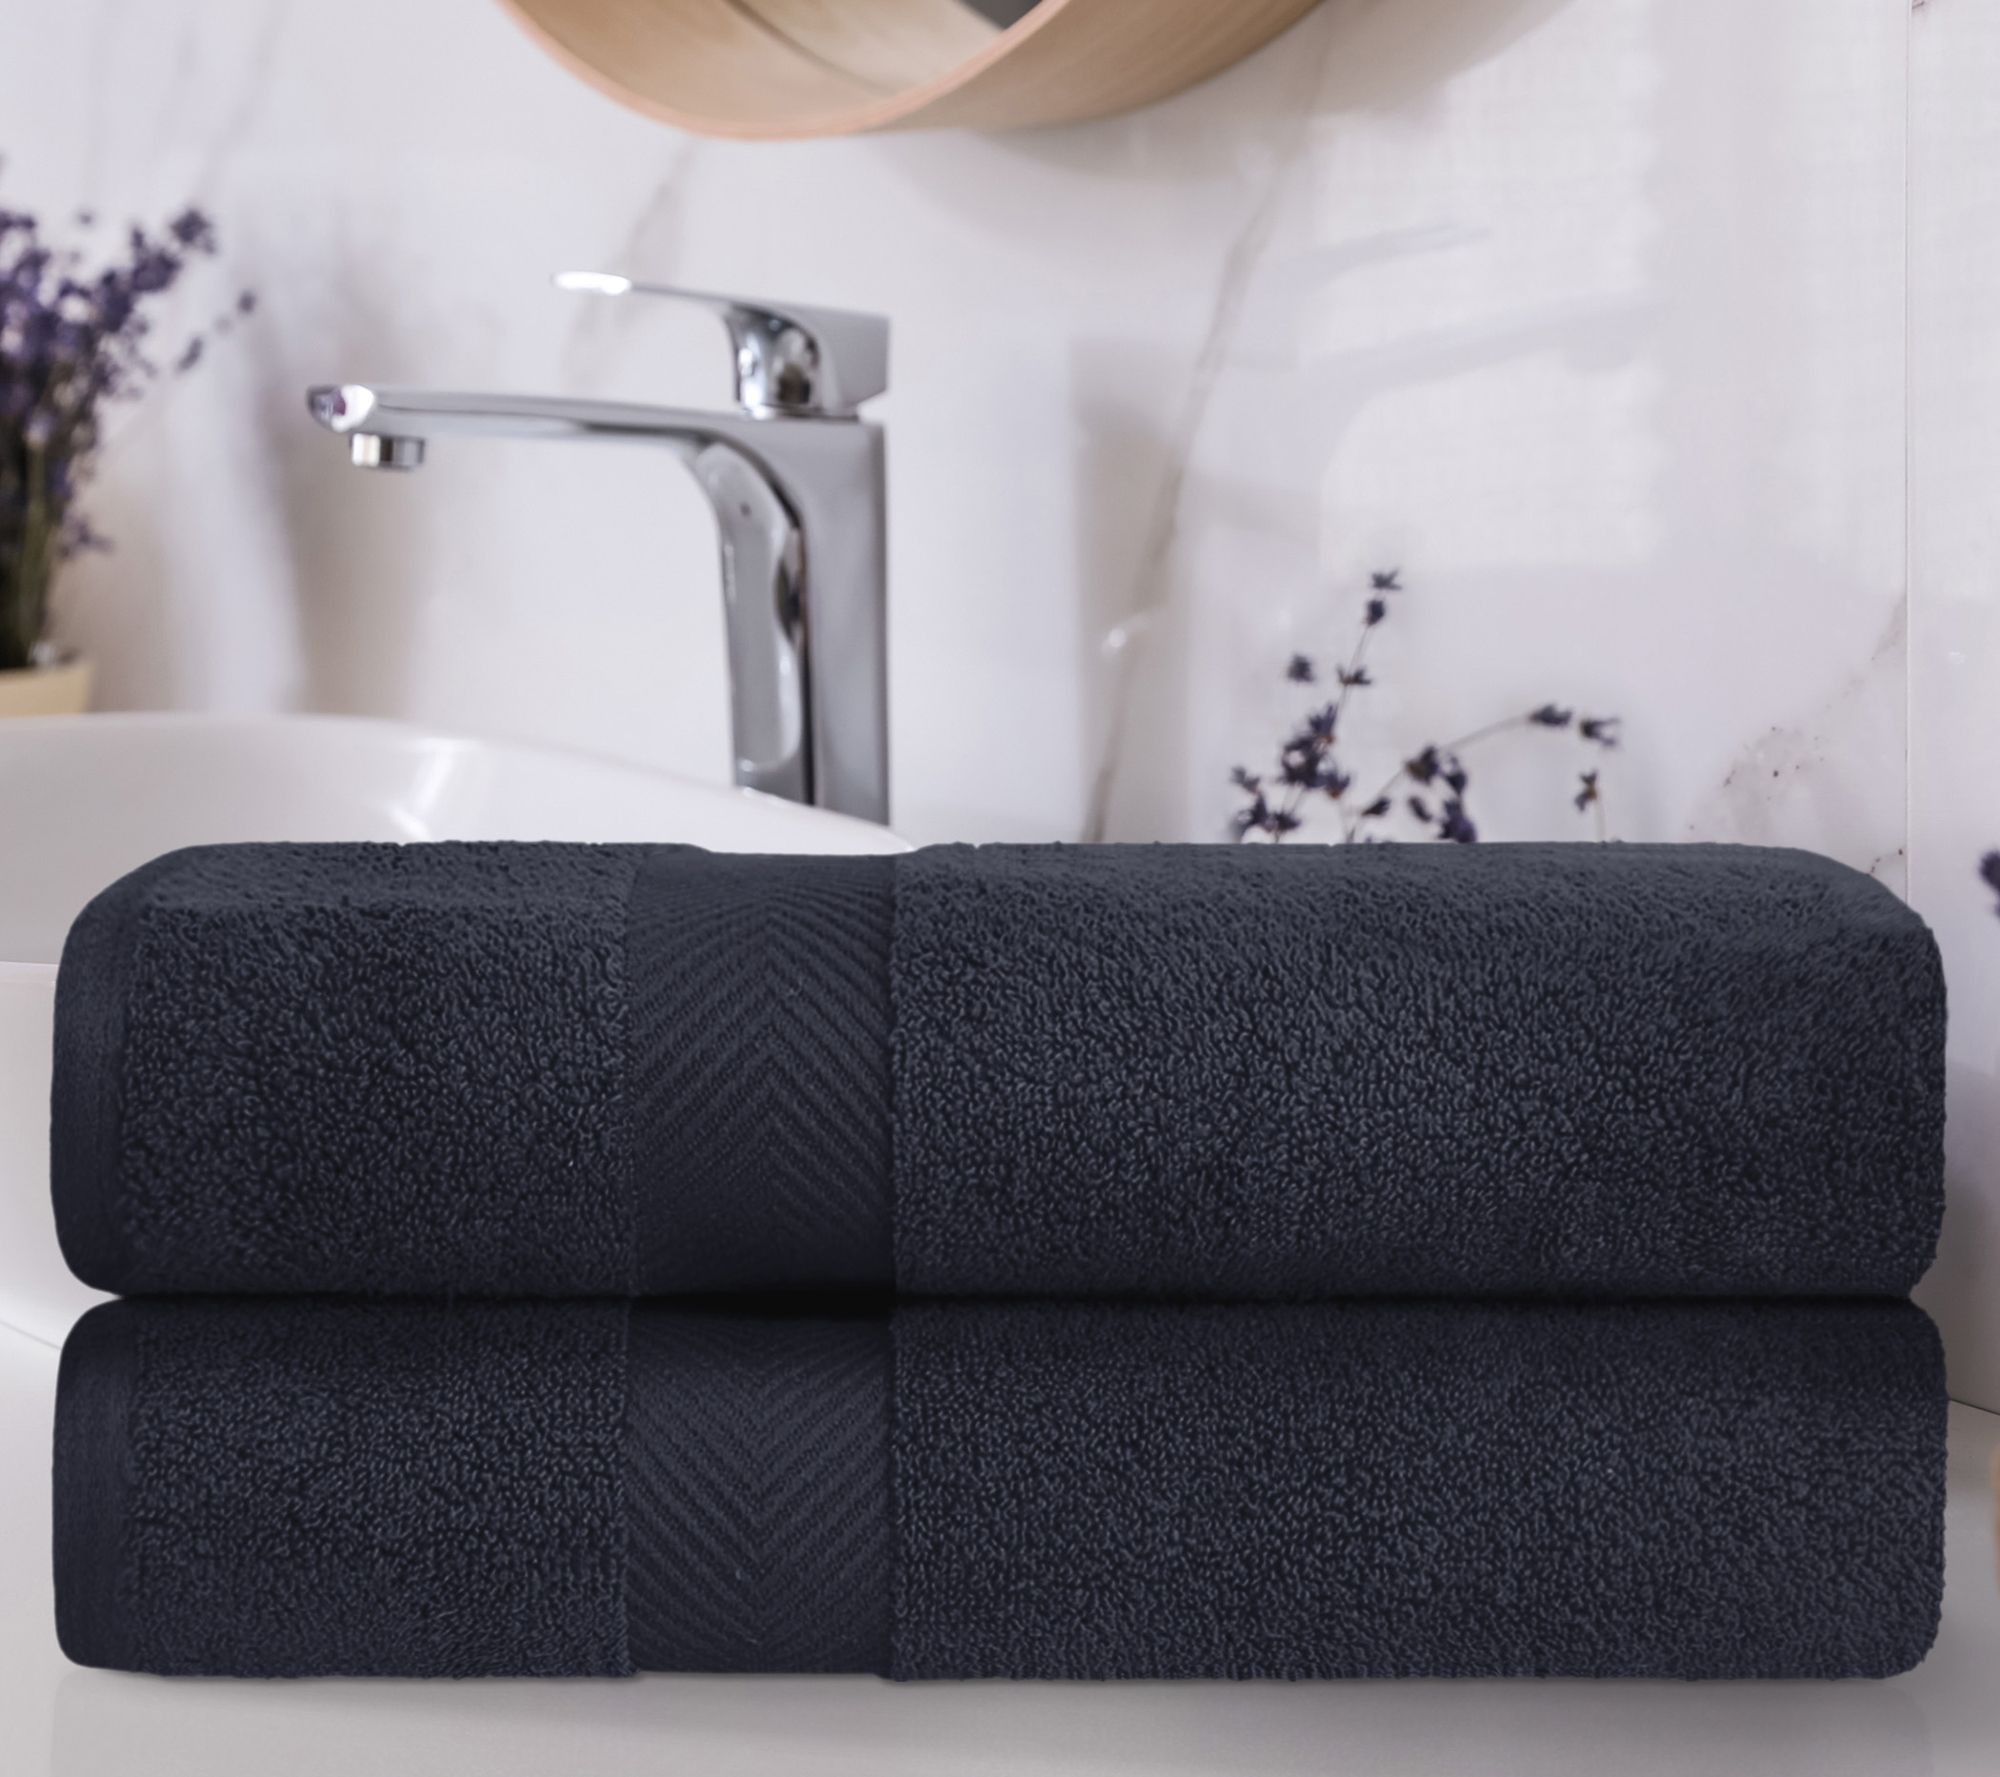 Superior Ribbed Cotton Ultra-Absorbent 4-Piece Silver Bath Towel Set, Size: 4 PC Bath Towels